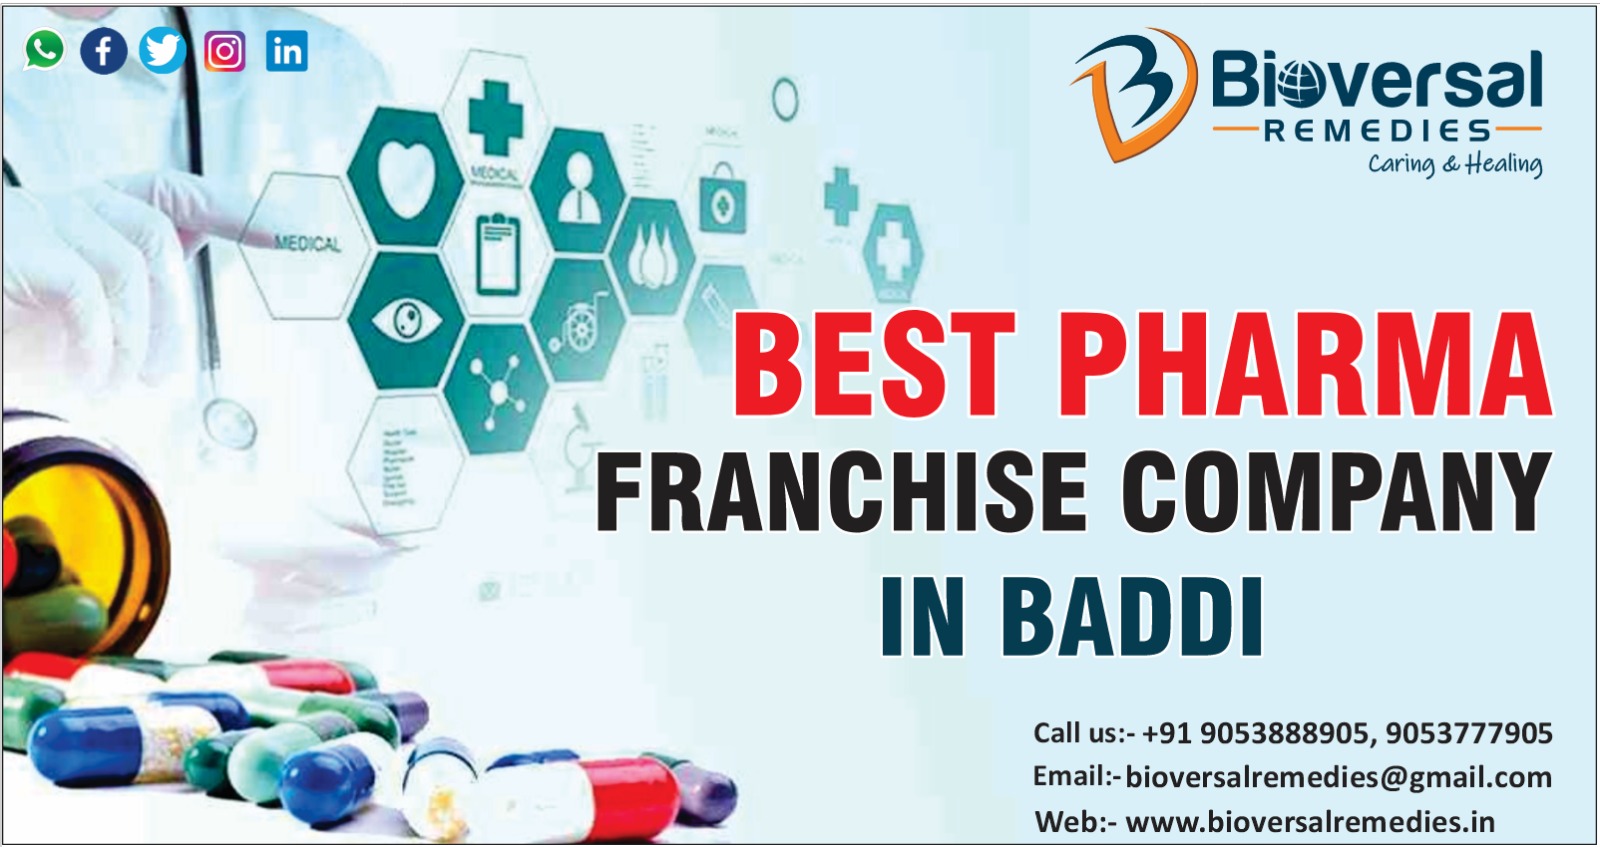 Best Pharma Franchise Company in Baddi